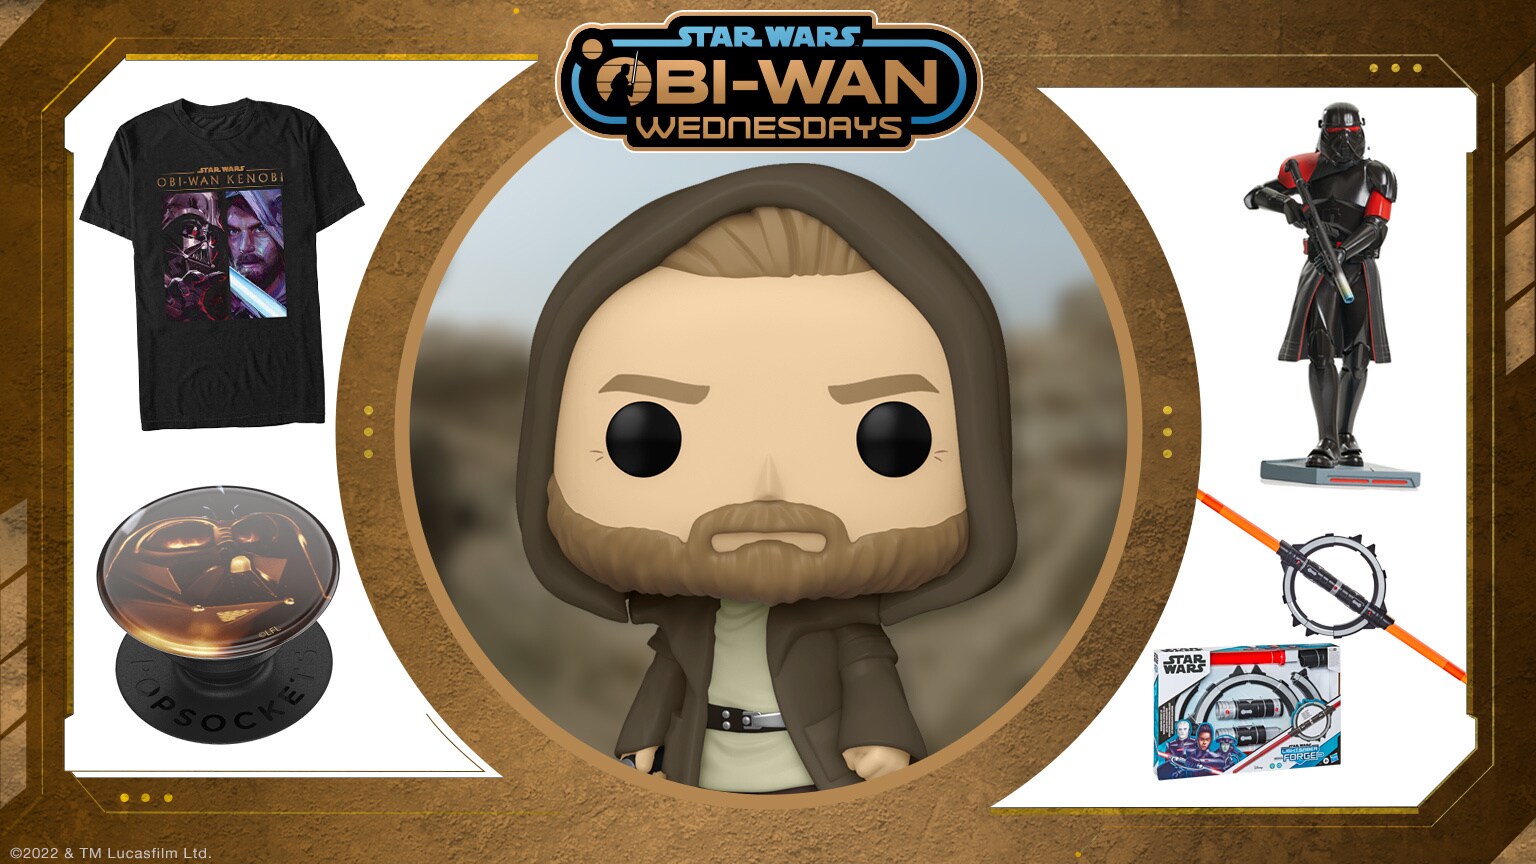 Obi-Wan Wednesdays: Funko’s Obi-Wan Kenobi Pop! 5-Pack Revealed and More!